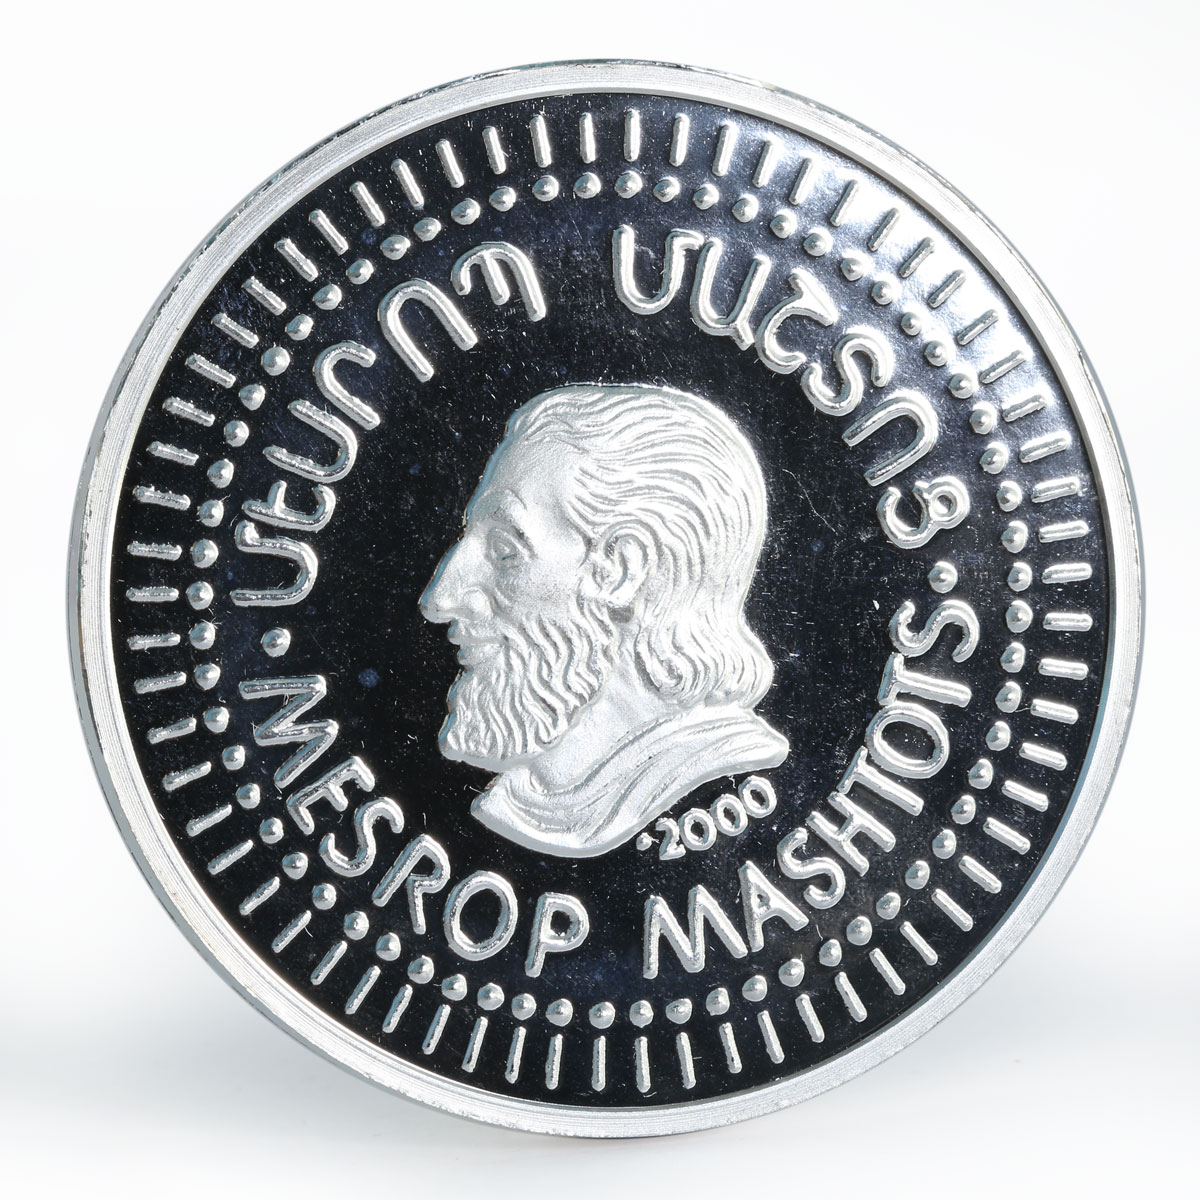 Armenia 50000 dram Mesrop Mashtots Scientist proof silver coin 1998